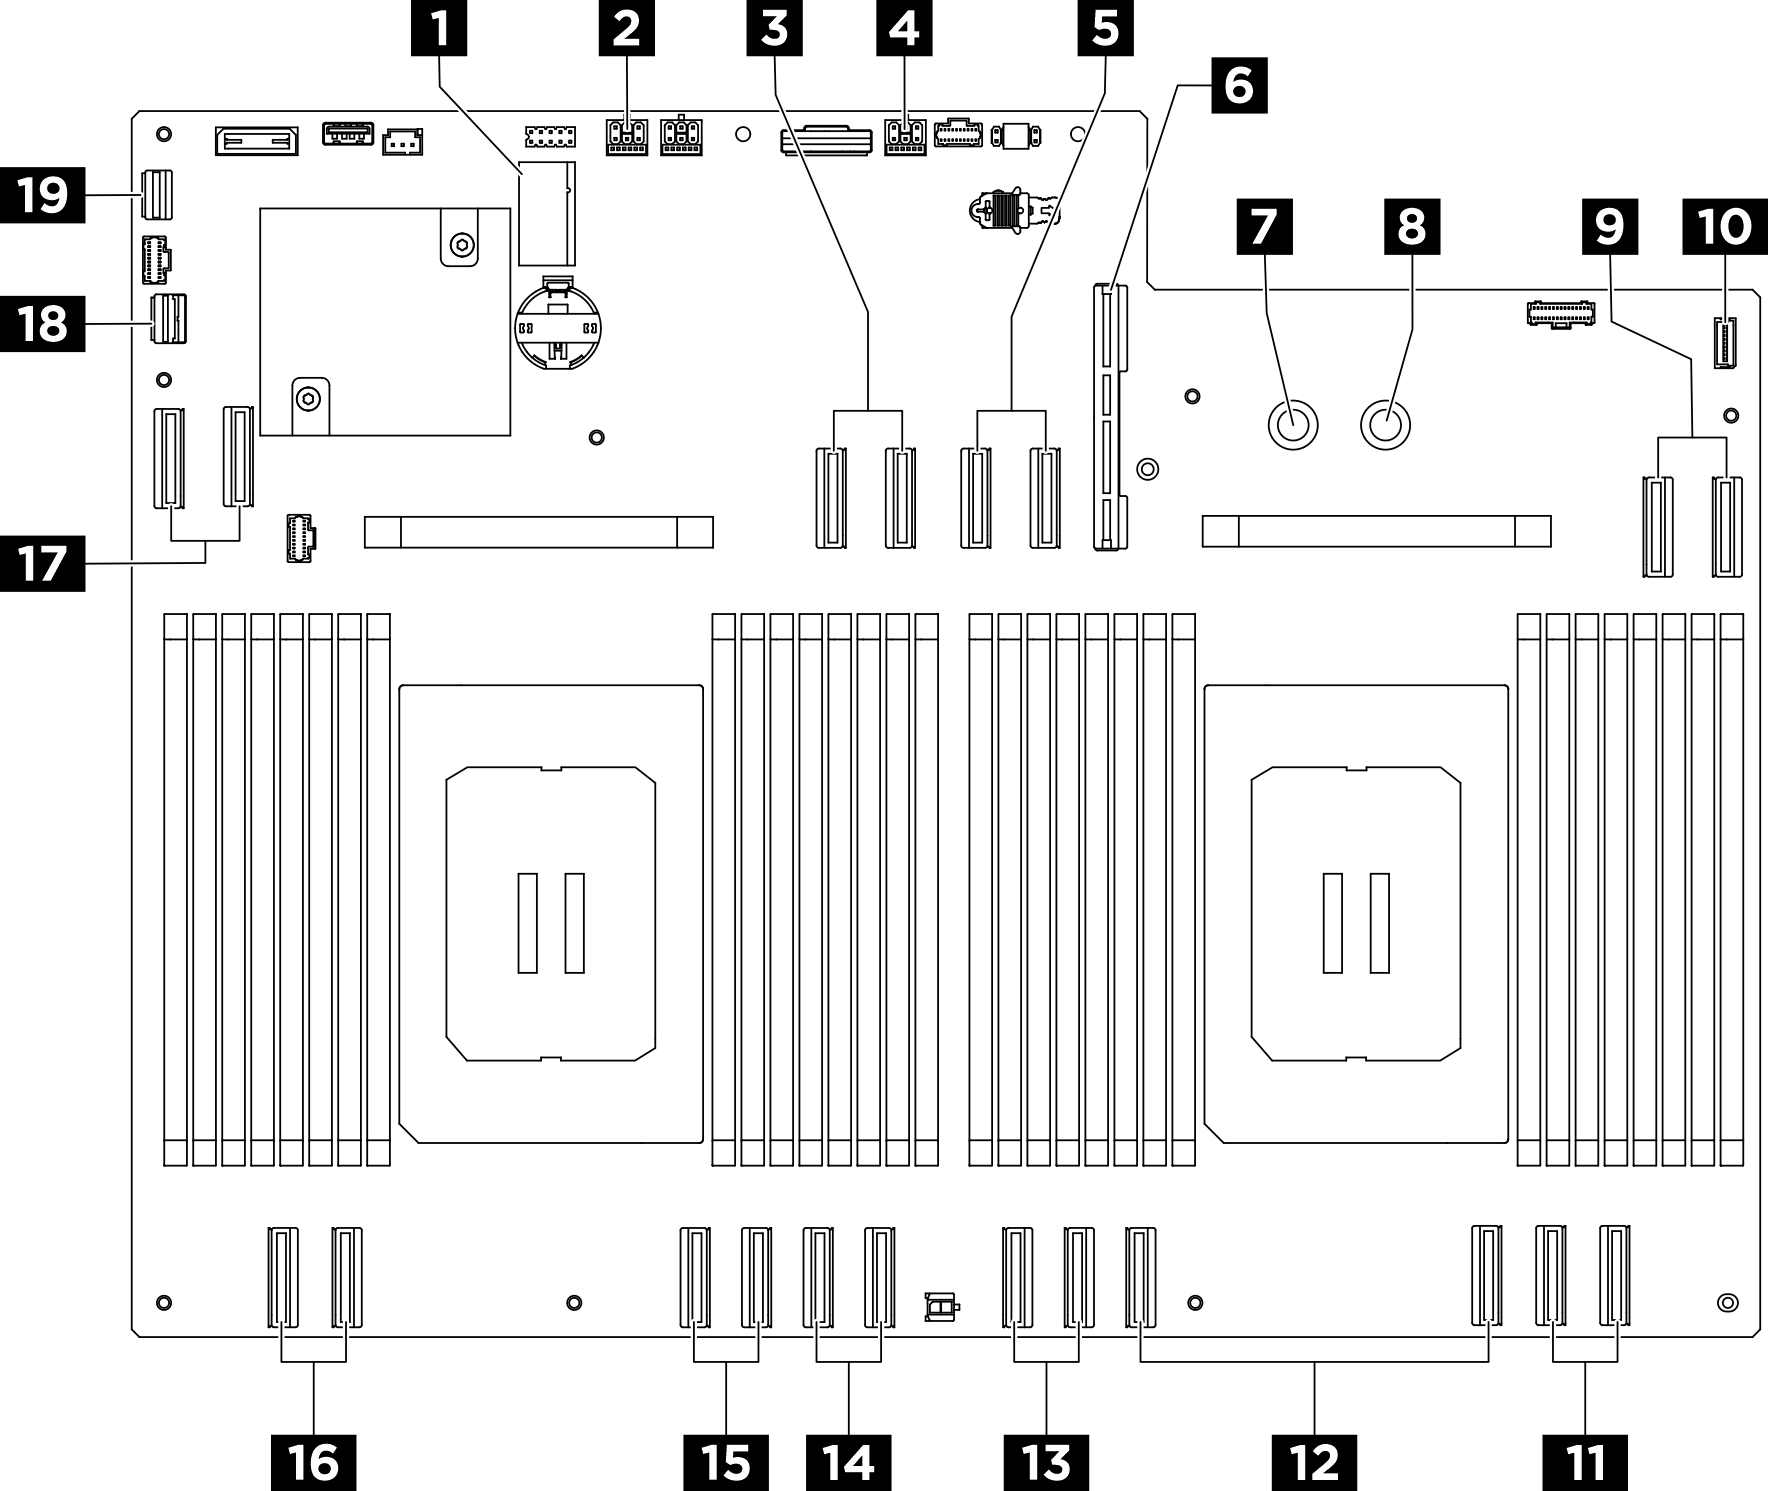 System boardconnectors